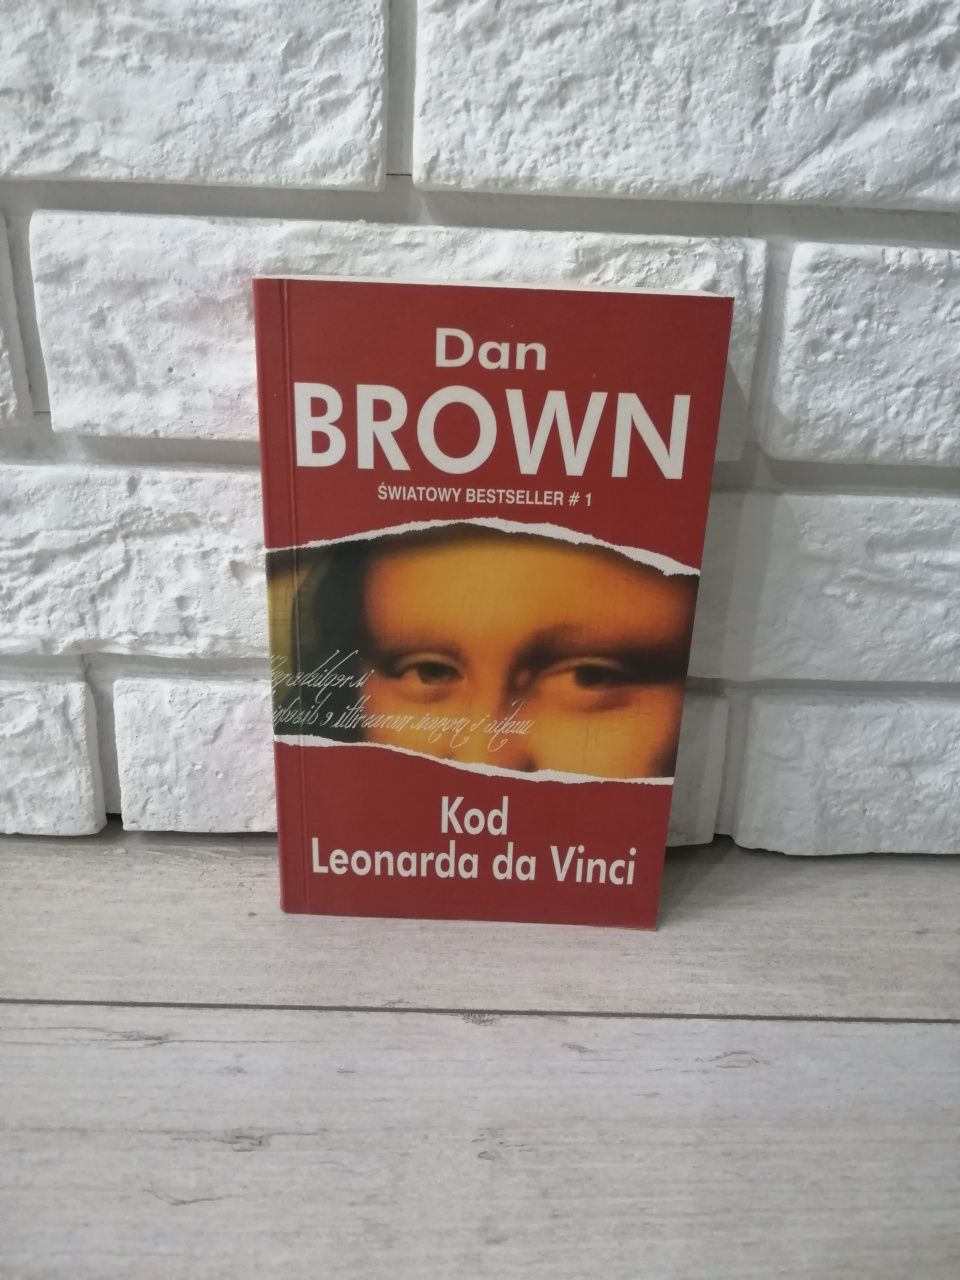 Dan Brown "Kod Leonarda da Vinci"